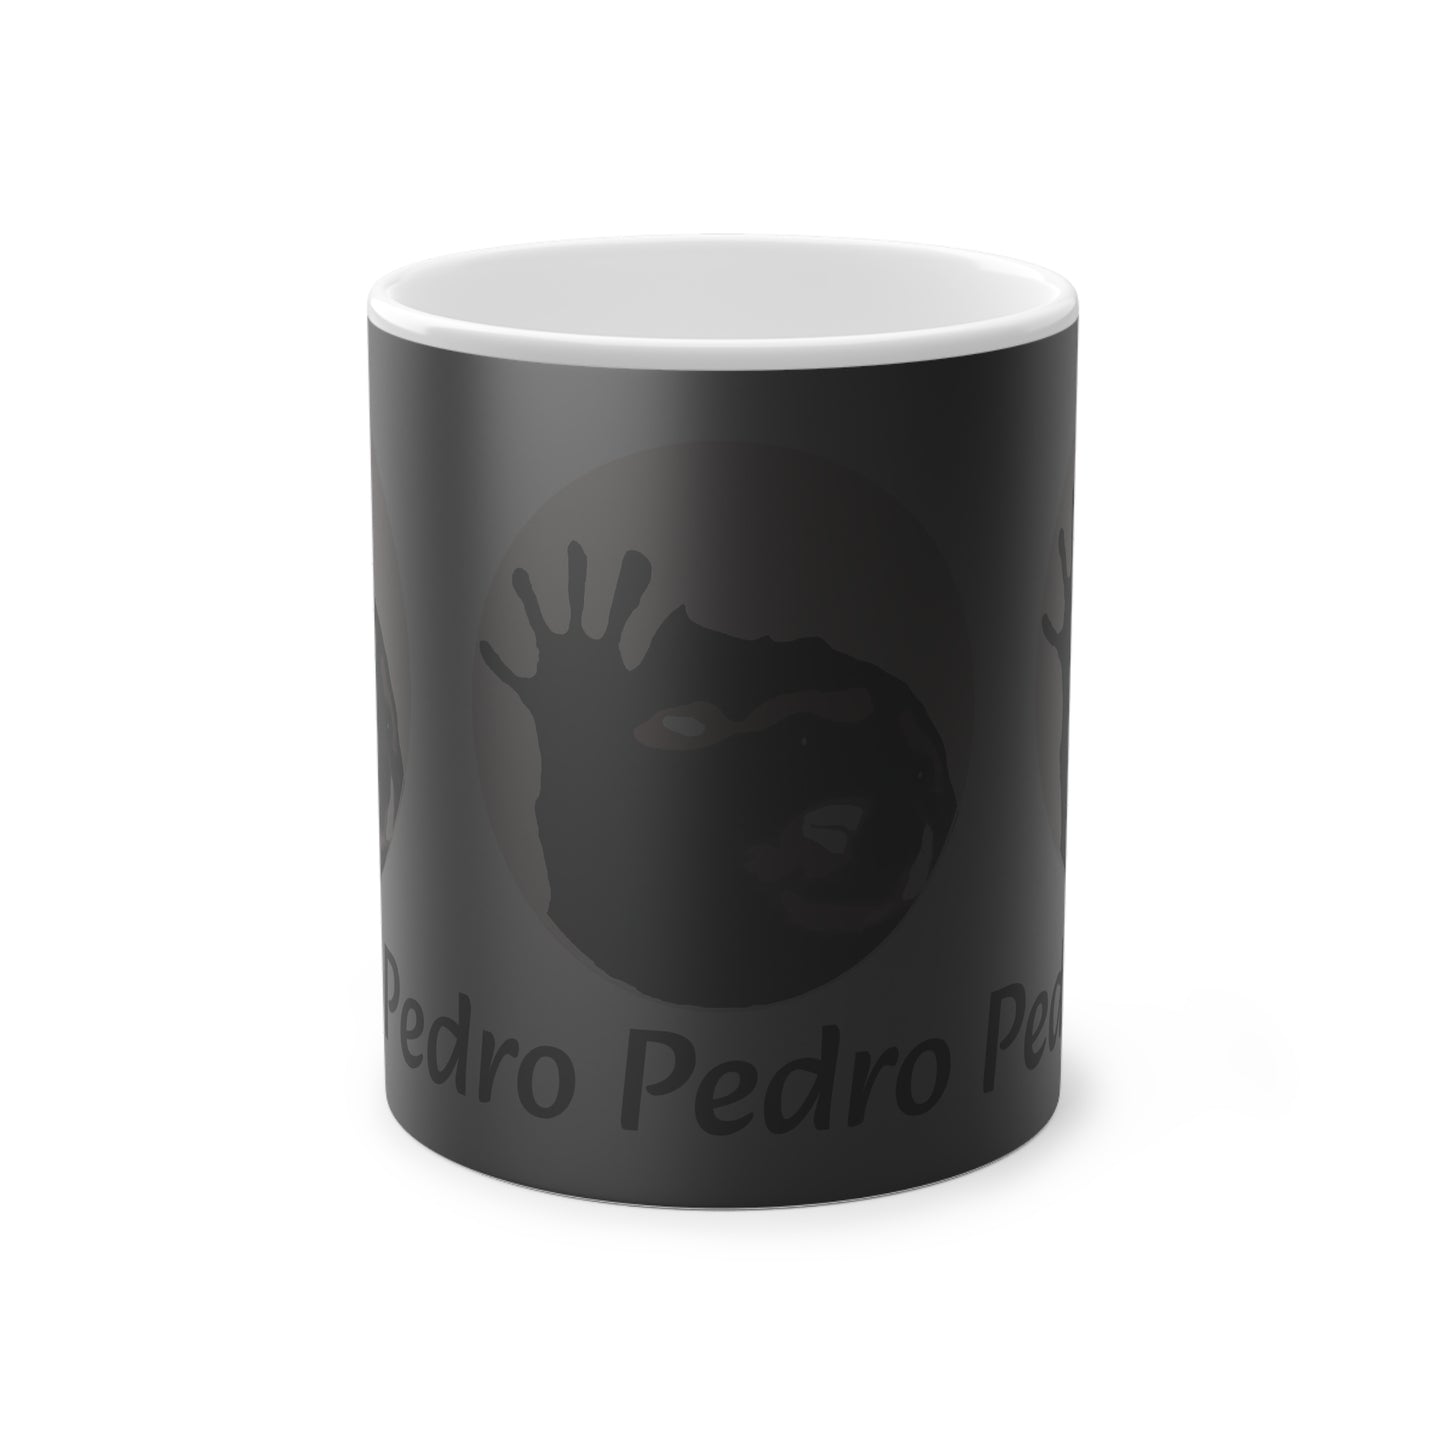 Magic Mug Meme | Mapache Pedro Pedro Pedro Pedro Pe